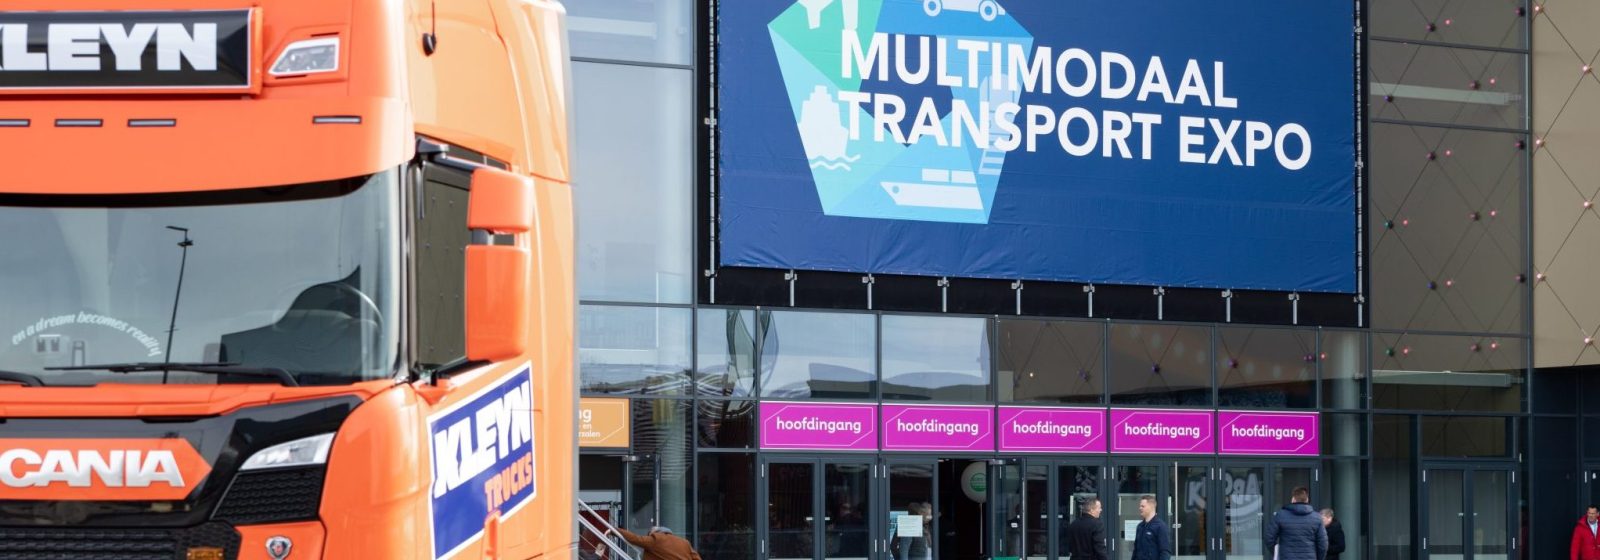 20230317 - Multimodaal Transport Expo 2023